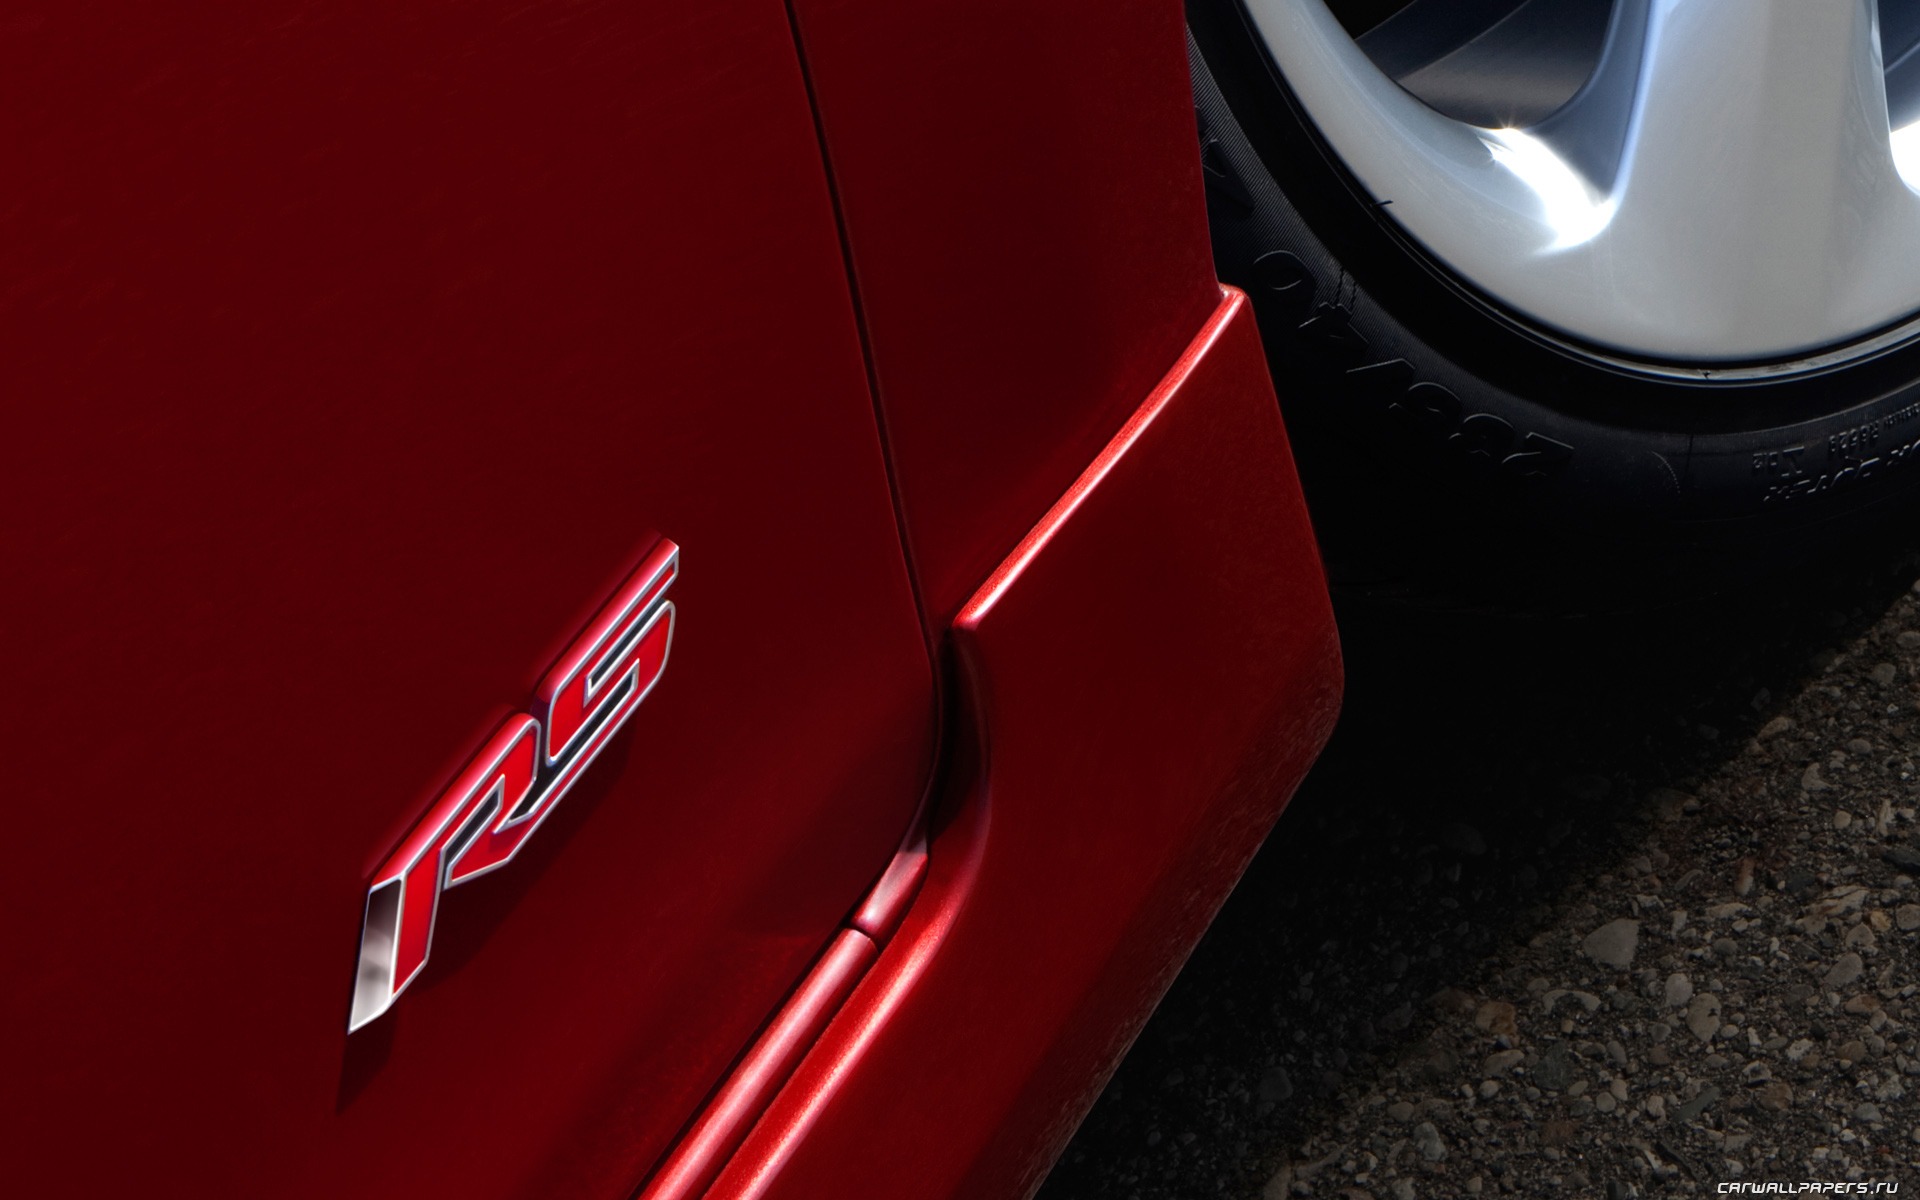 Chevrolet Cruze RS - 2011 雪佛蘭 #9 - 1920x1200